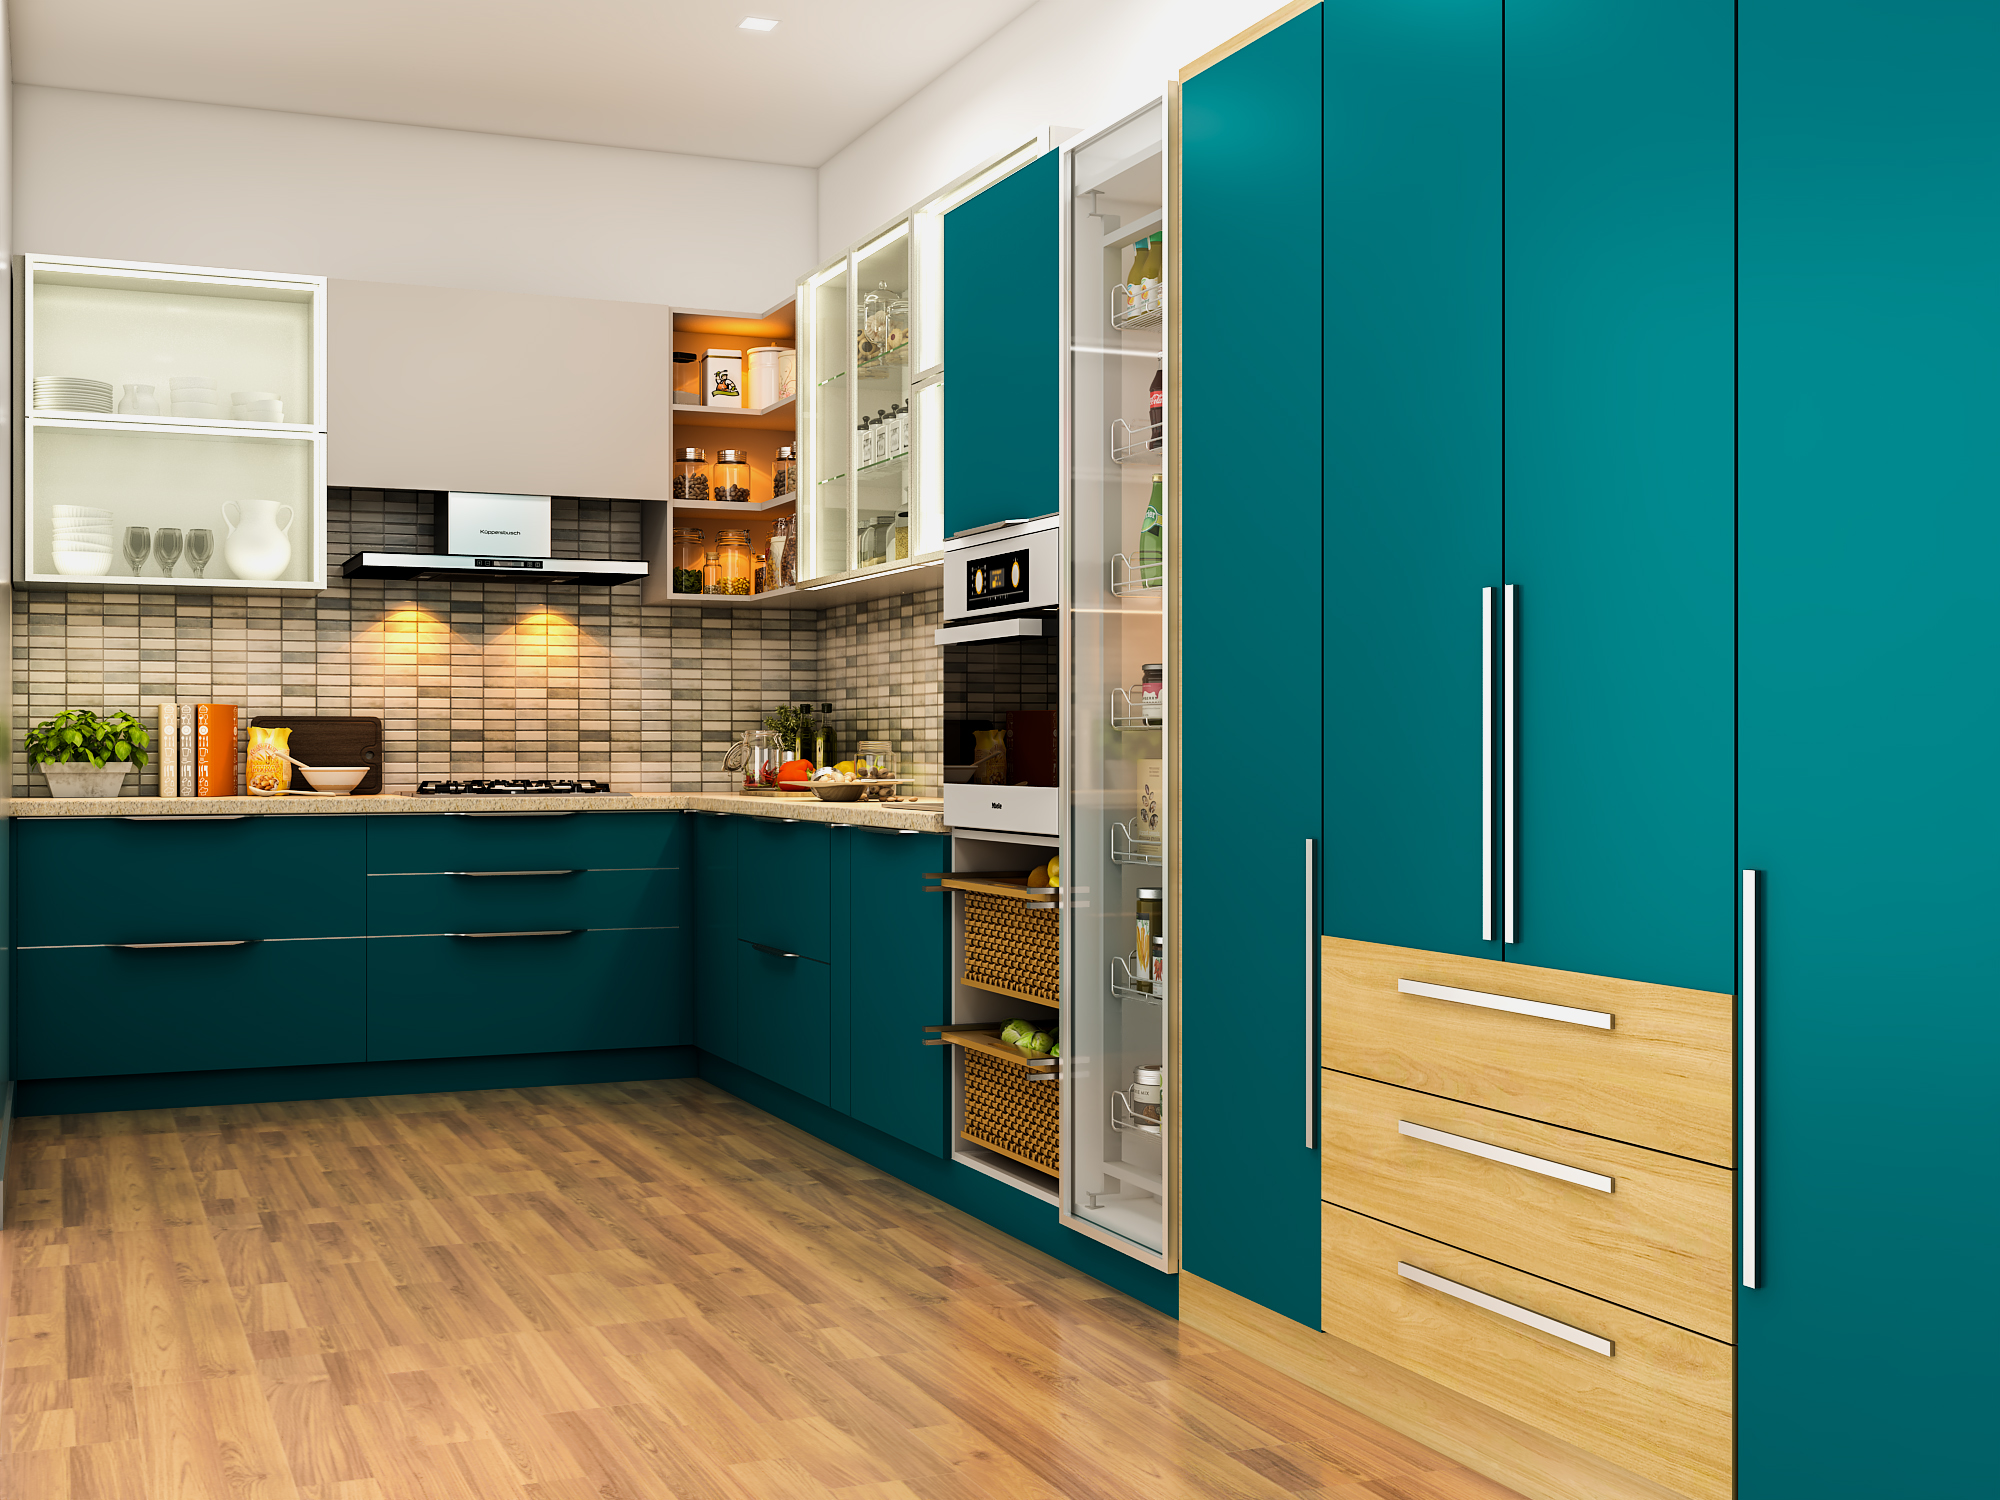 modular kitchen planning and designing guide